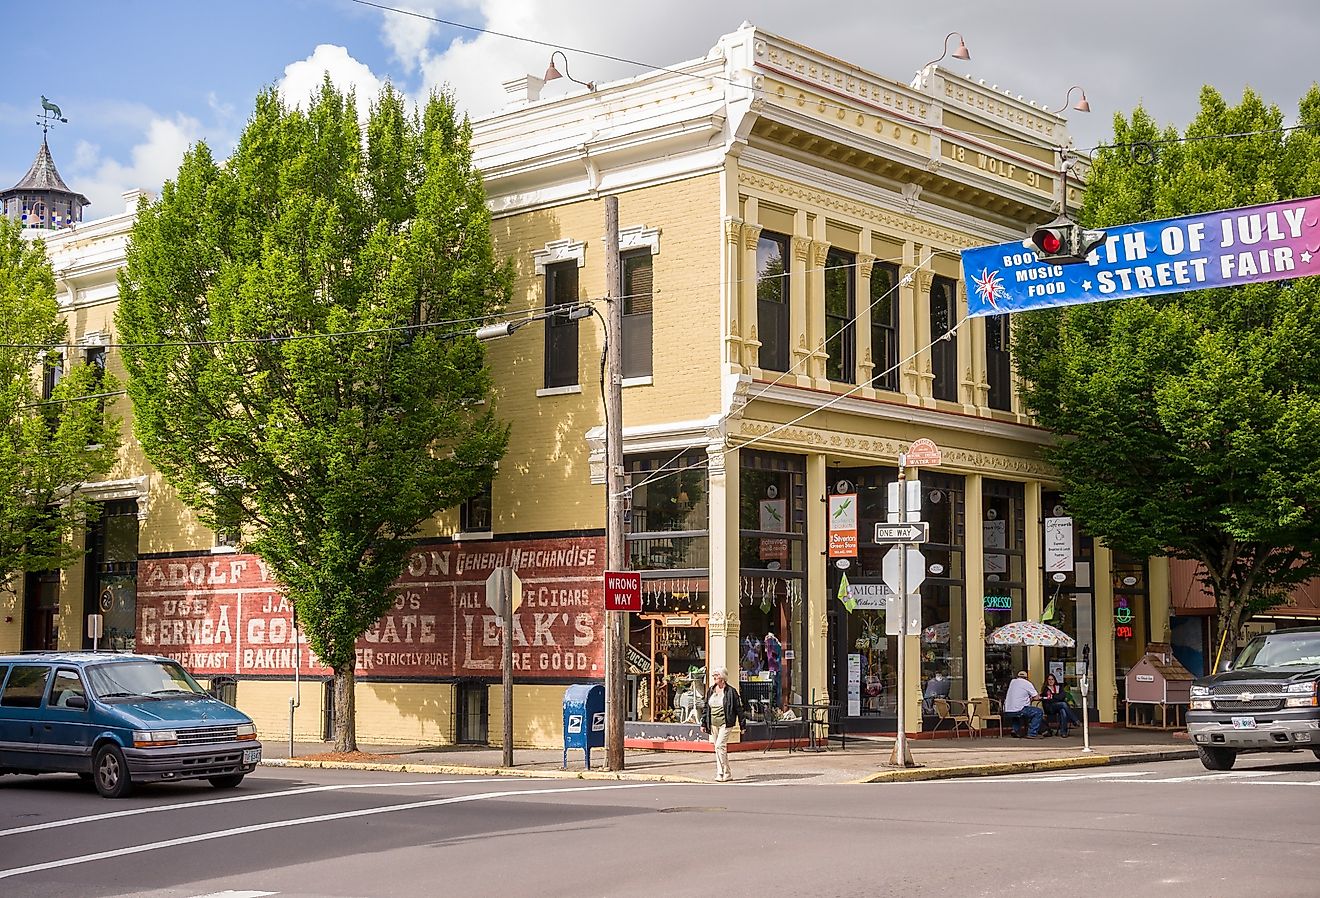 Downtown city of Silverton, Oregon. Image credit Laurens Hoddenbagh via Shutterstock